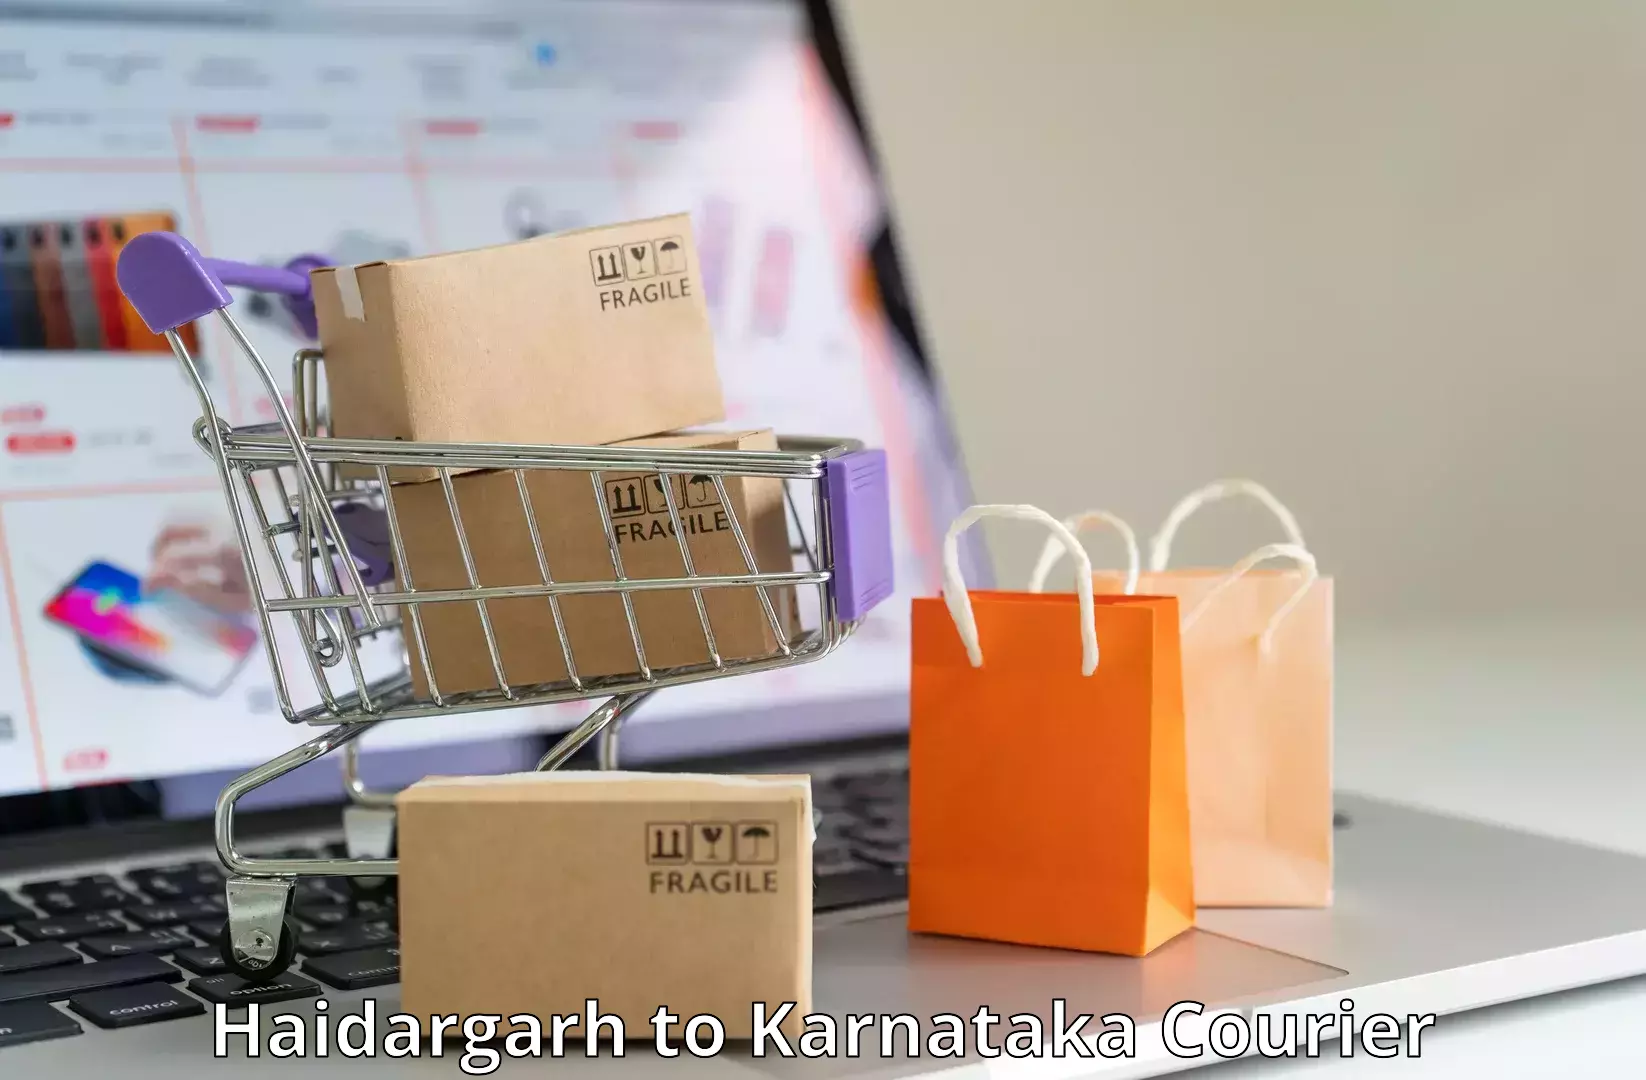 Multi-service courier options Haidargarh to Chamarajanagar